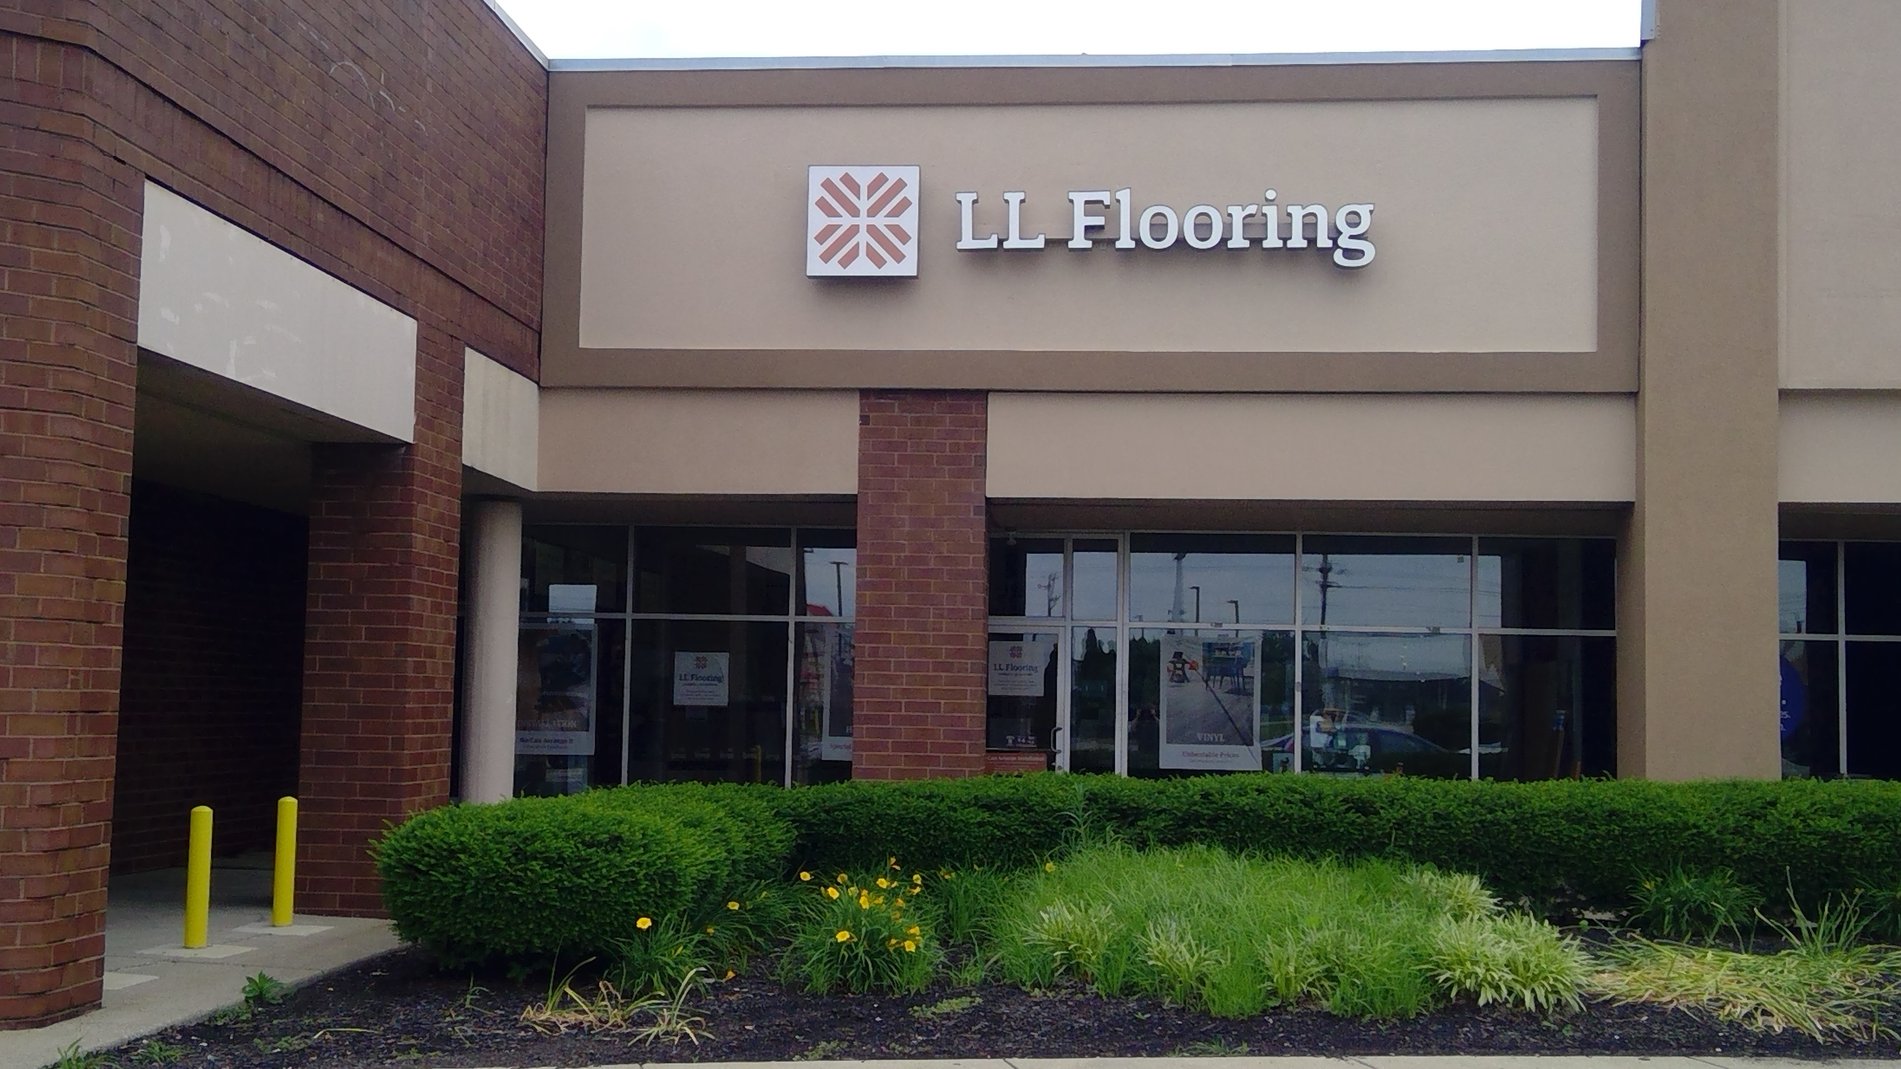 LL Flooring #1317 Reynoldsburg | 2736 Brice Rd. | Storefront